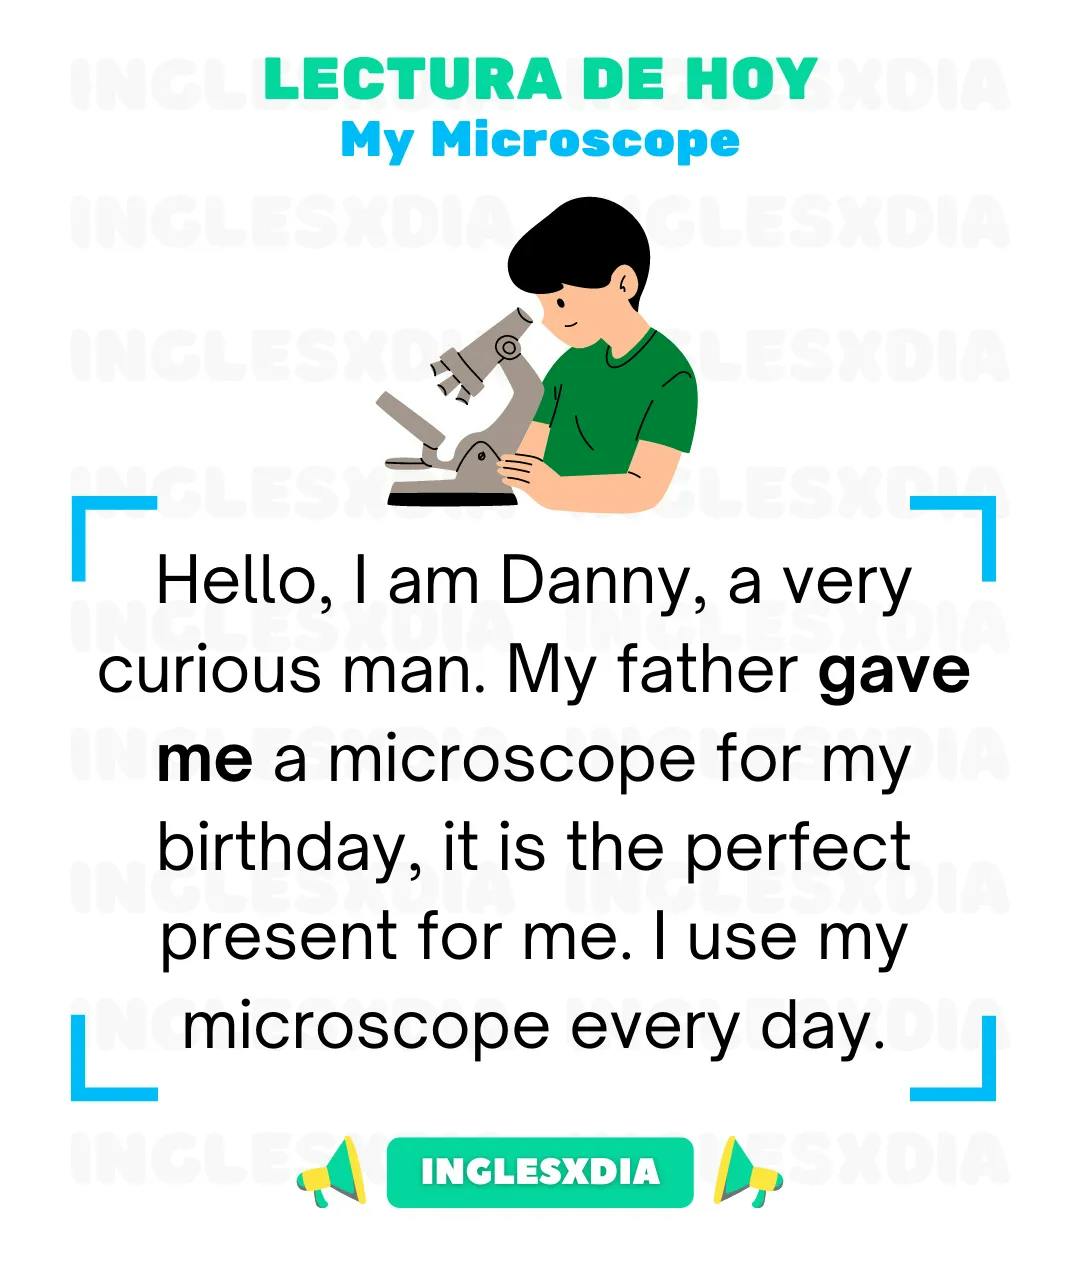 My Microscope